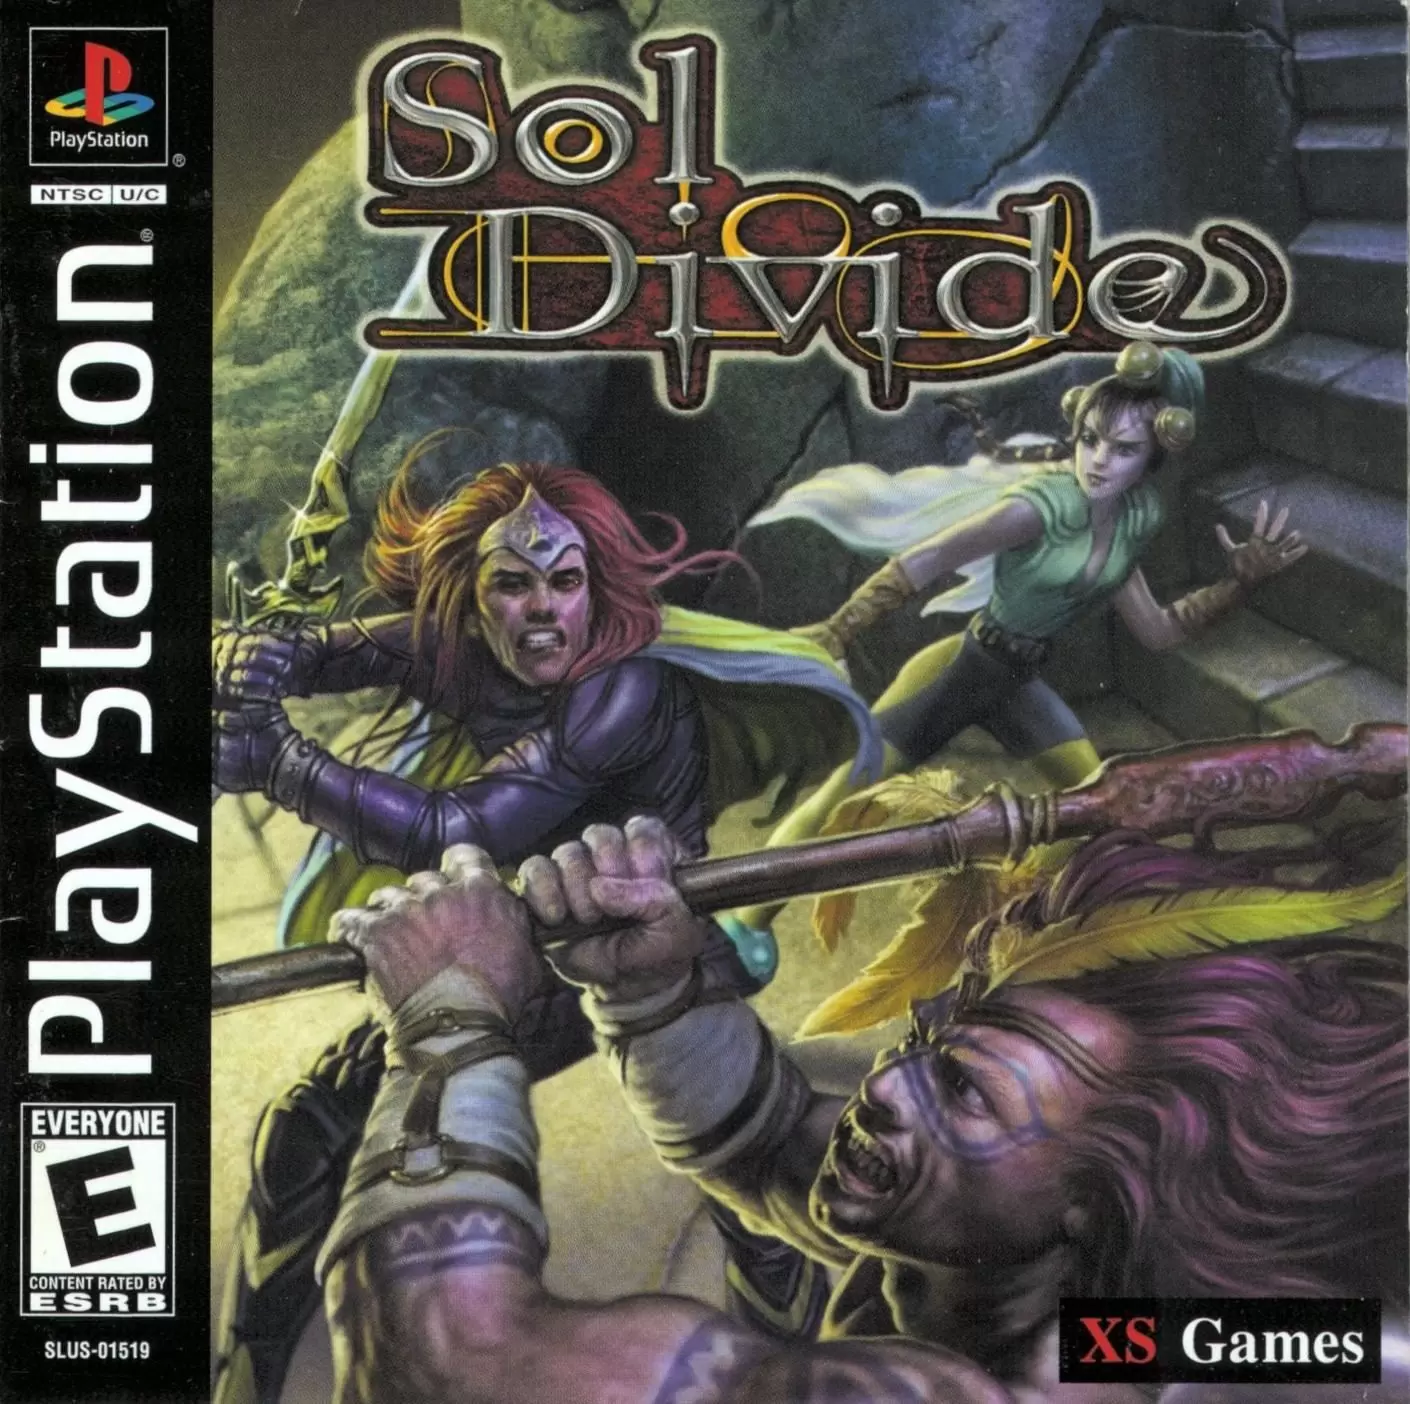 Playstation games - Sol Divide